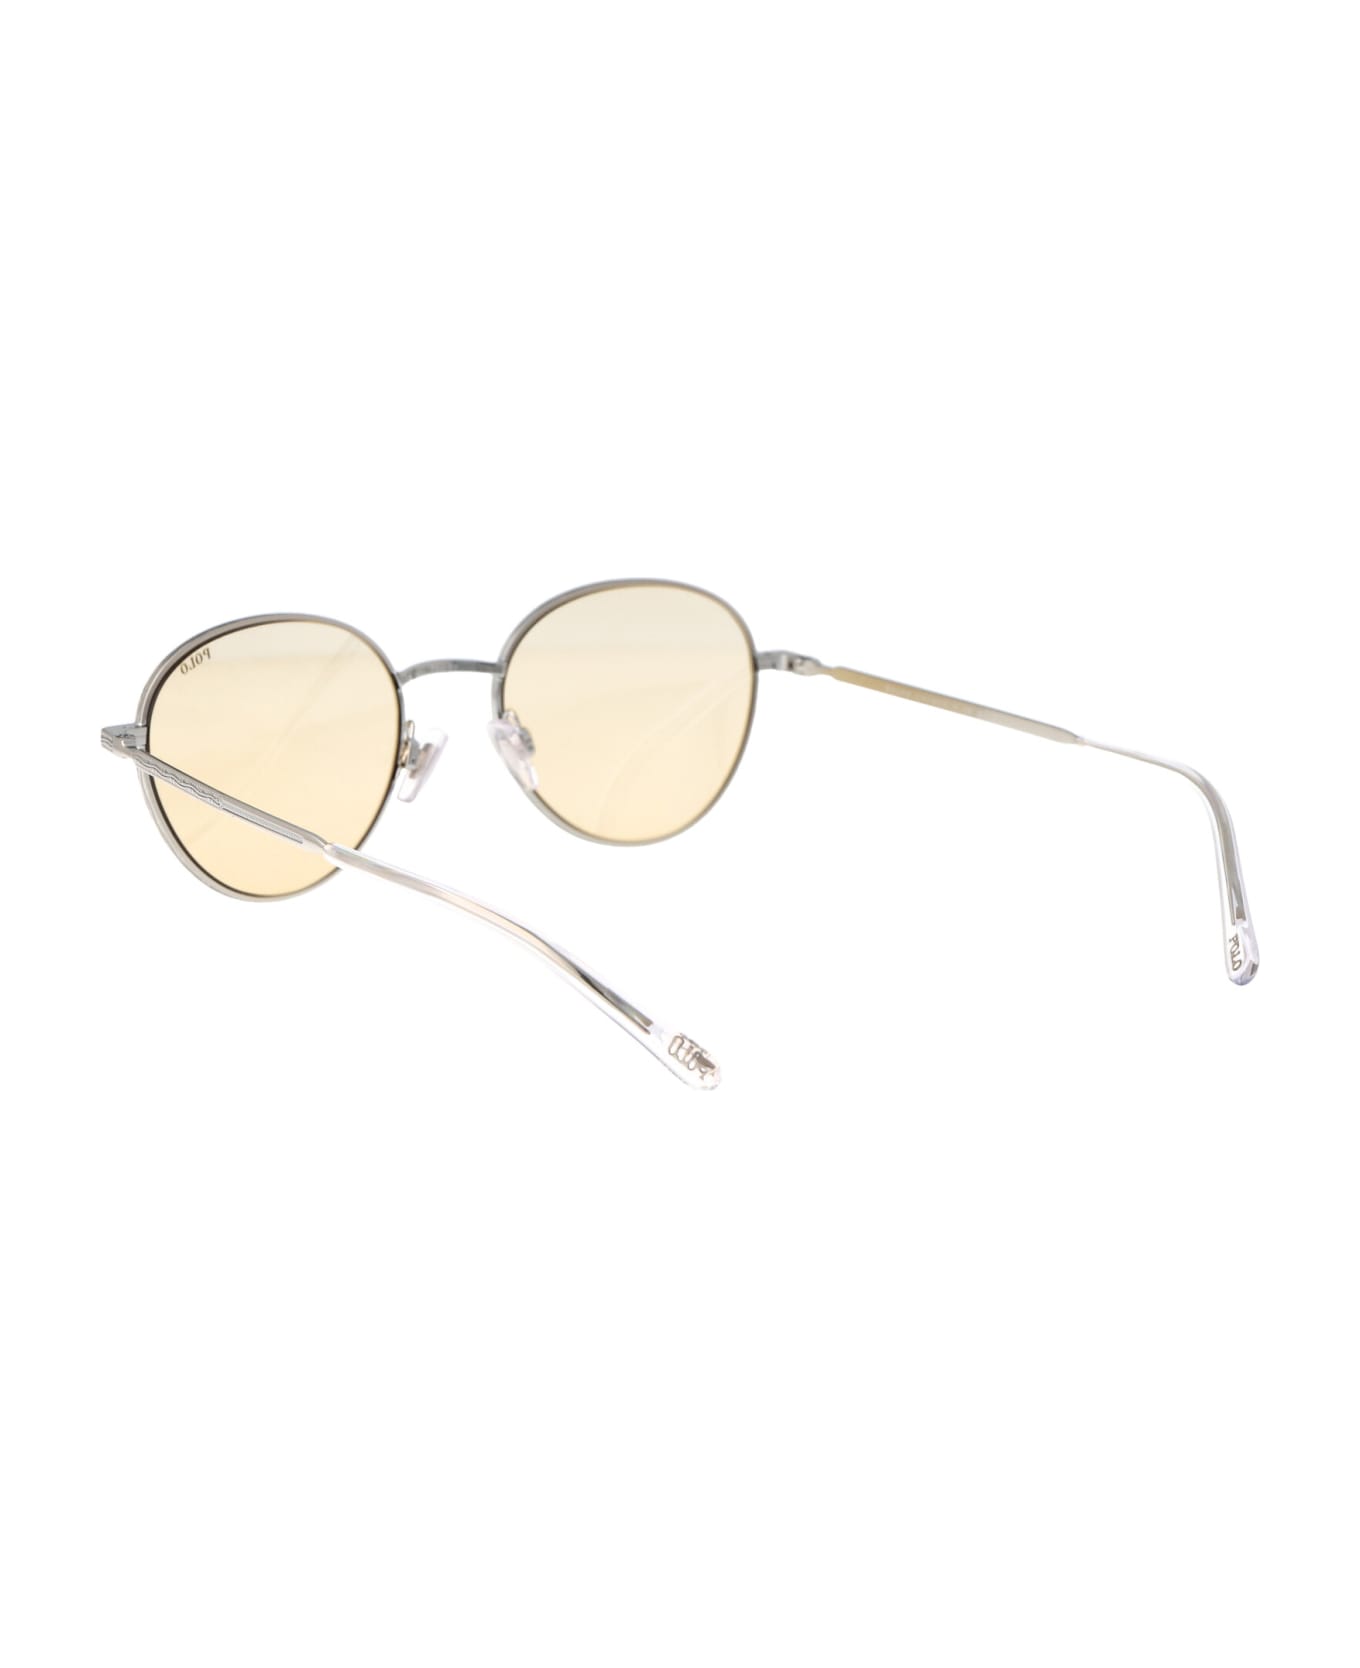 Polo Ralph Lauren 0ph3144 Sunglasses - 9001/8 Shiny Silver サングラス